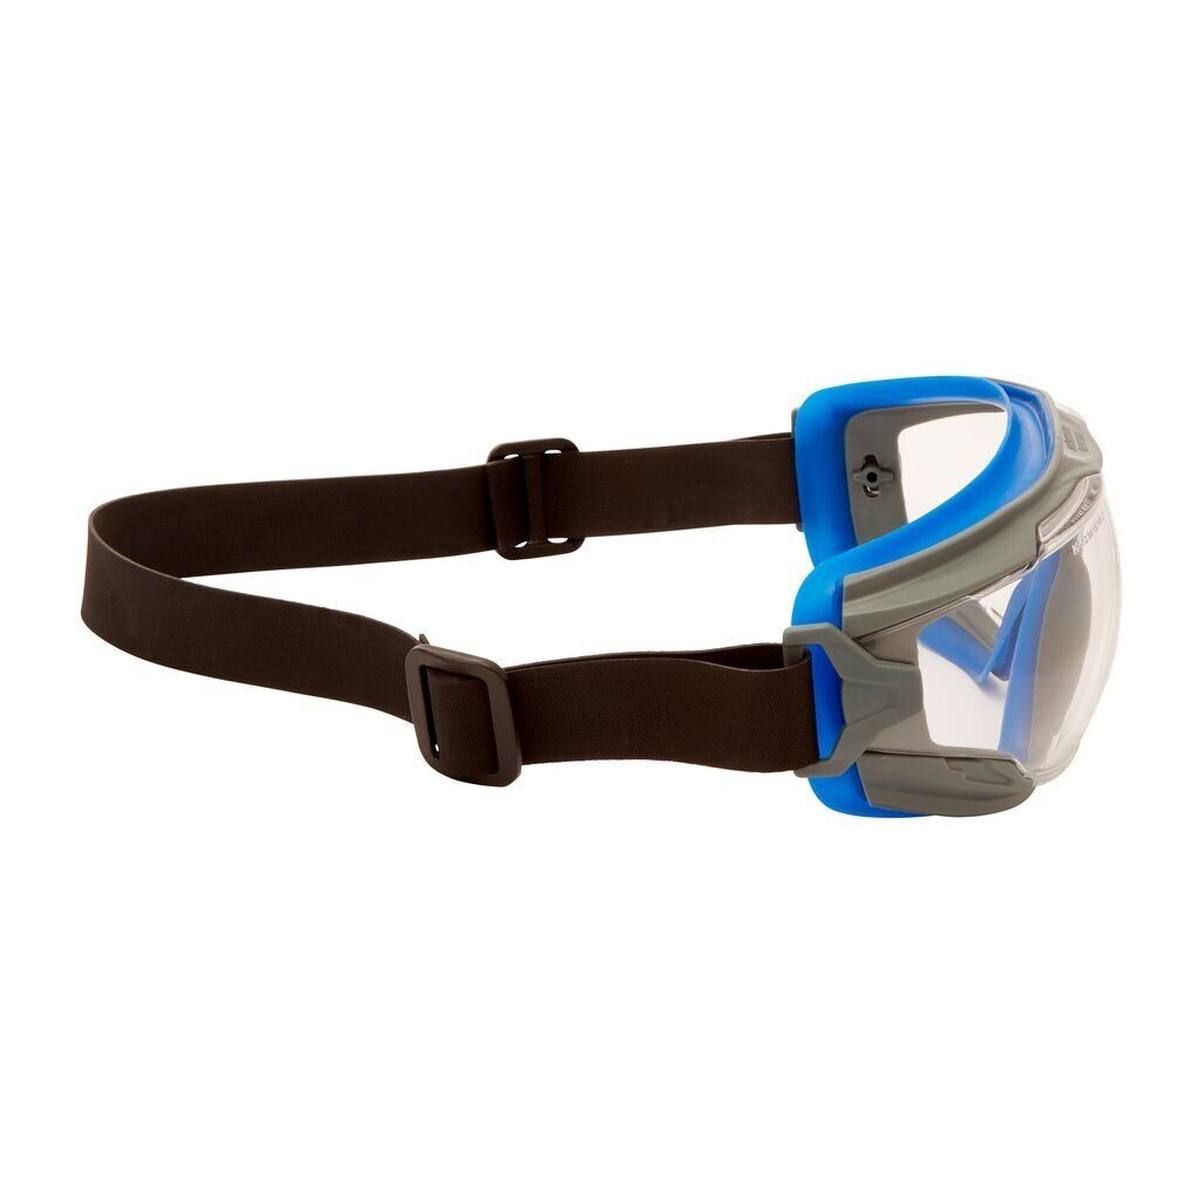 occhiali 3M GoggleGear 500 a visione totale GG501NSGAF-BLU, autoclavabili, montatura grigio-blu, fascia in neoprene nero, lenti chiare